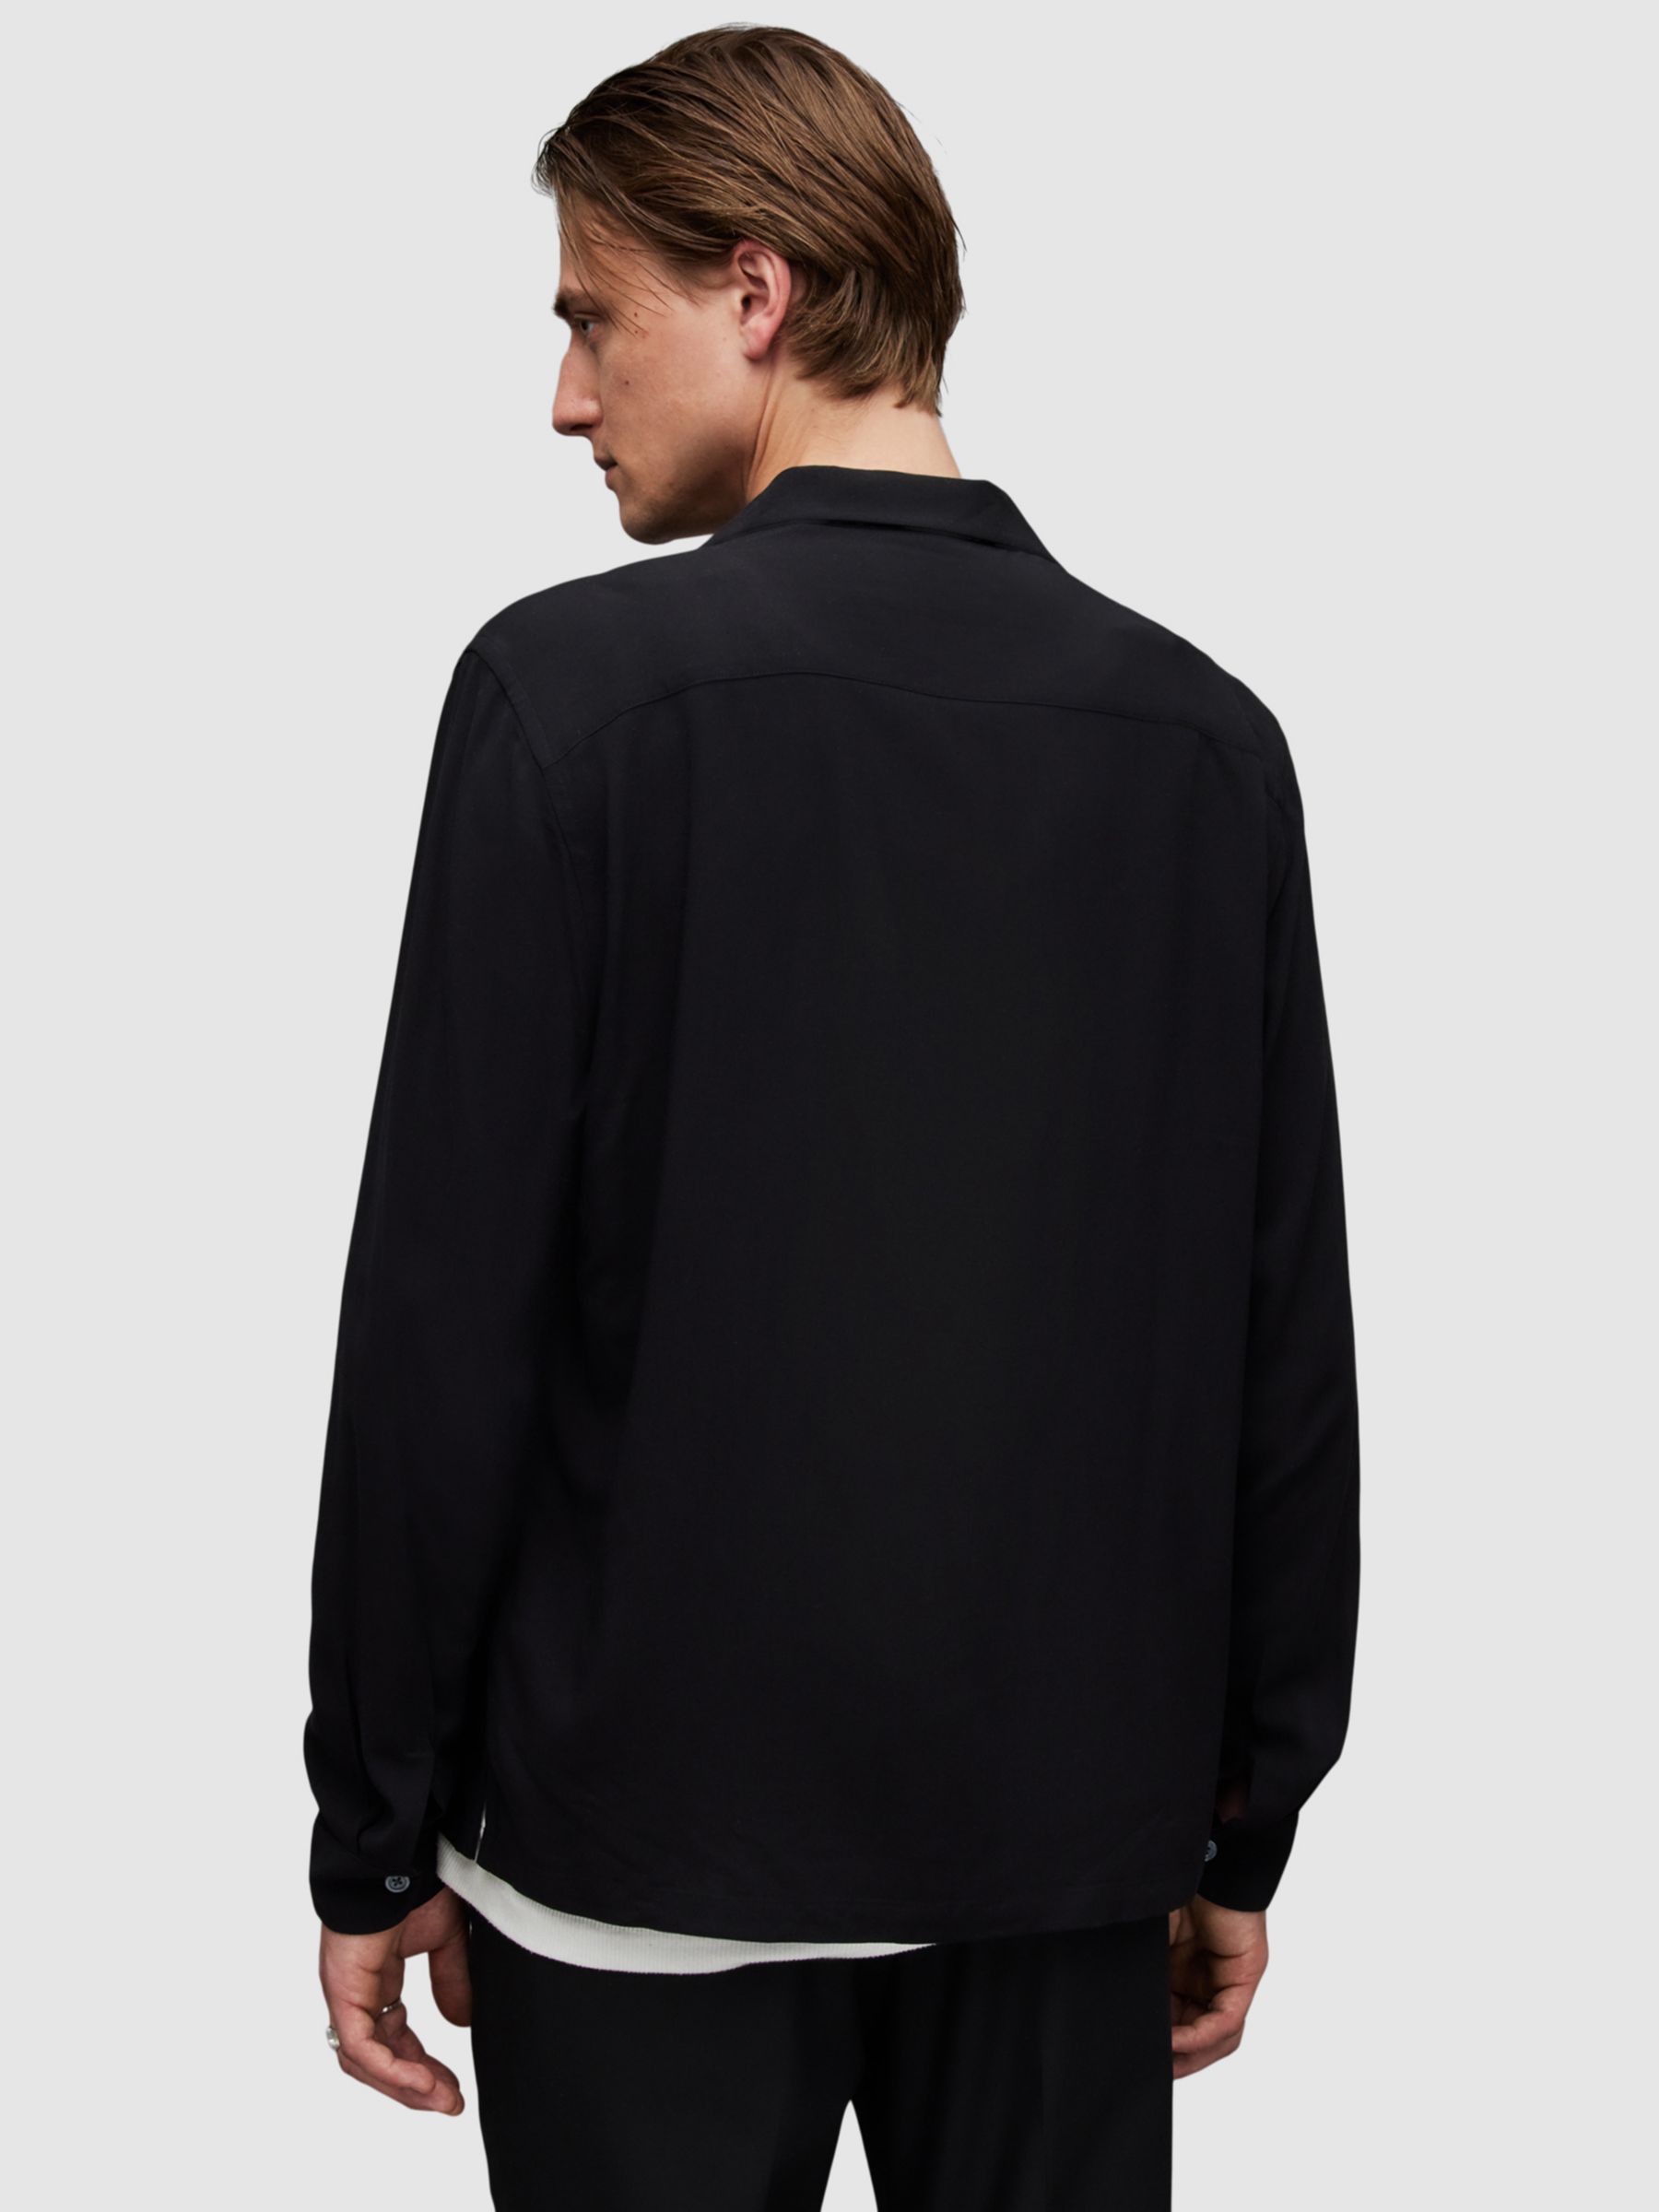 Buy AllSaint Venice Long Sleeve Shirt, Black Online at johnlewis.com